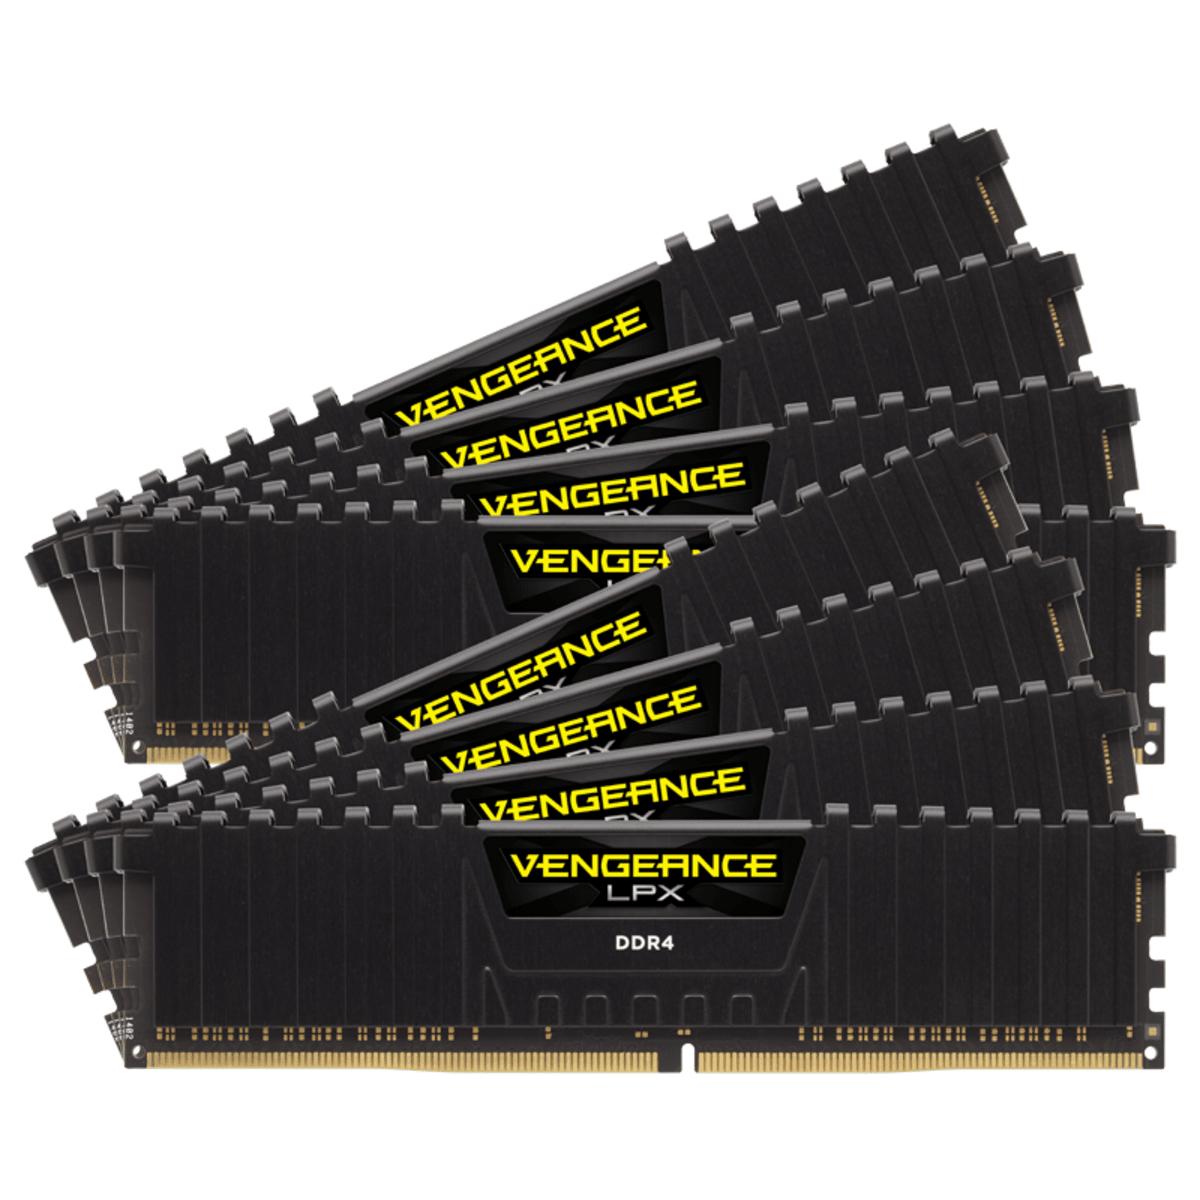 GB CORSAIR 256 8x32GB,1,35V,VengLPX DDR4 bk Speicher-Kit